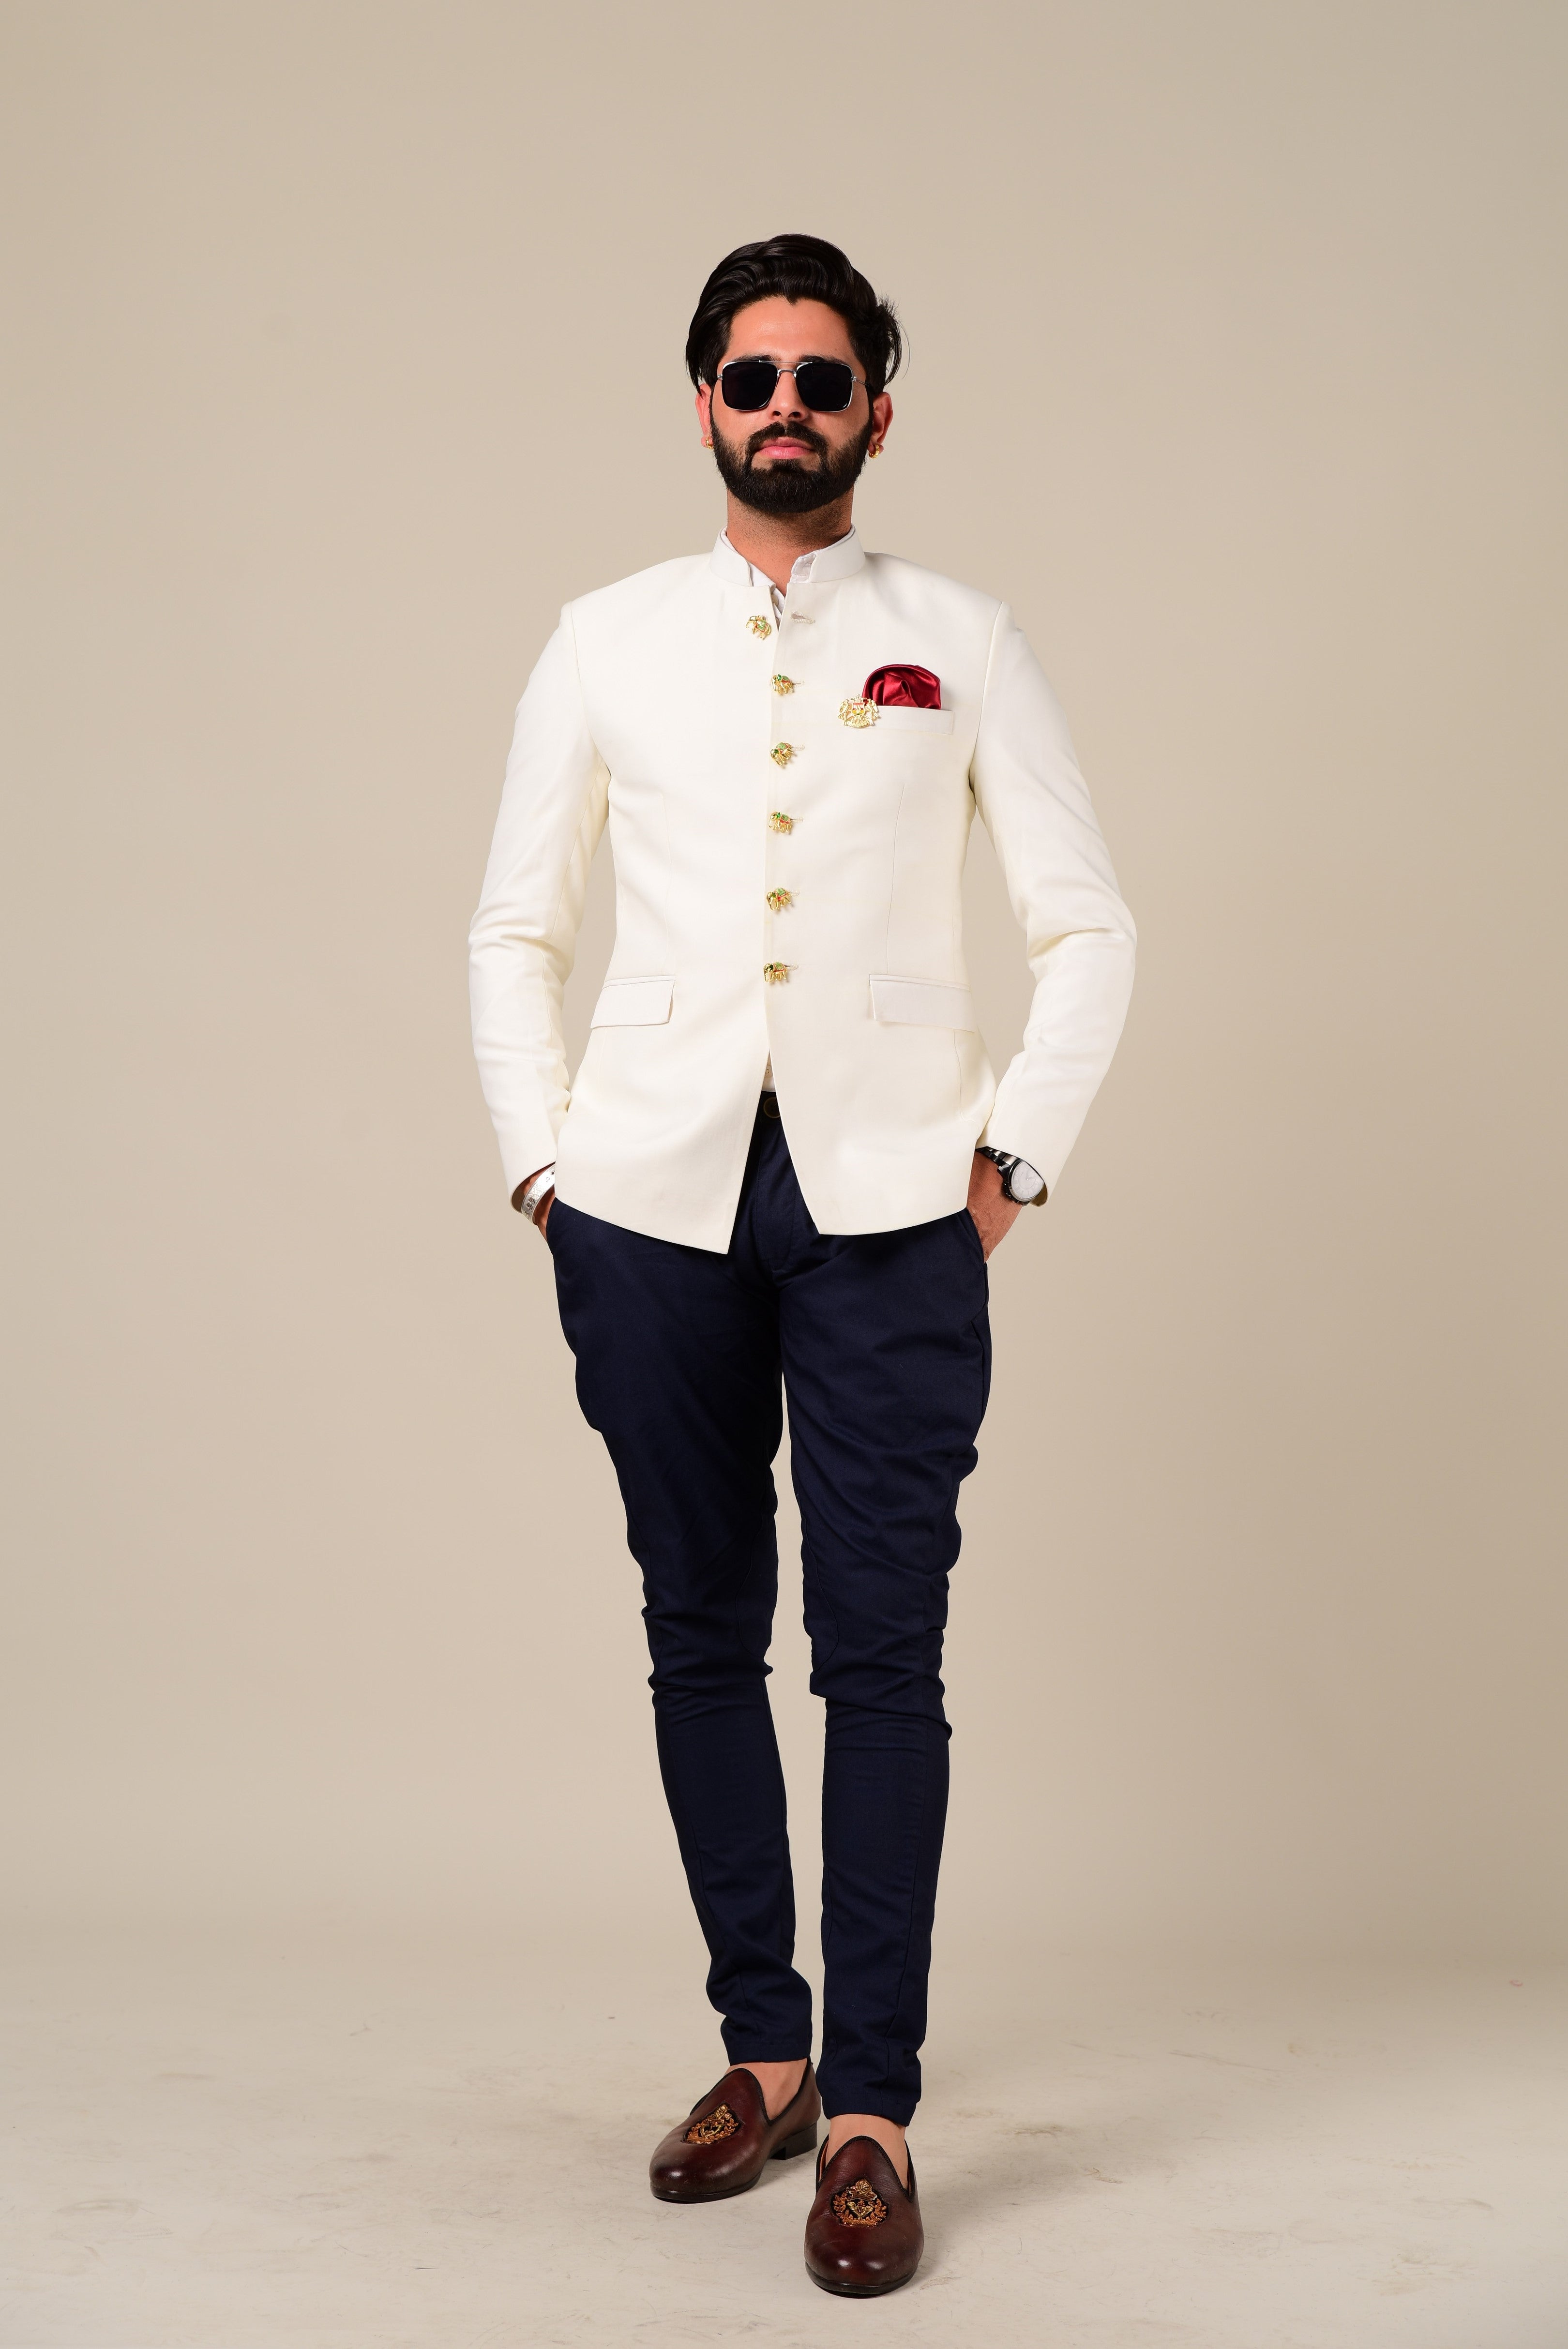 Waistcoat blue trousersblue blazer and tie outfit ideas for men  Best  Fashion Blog For Men  TheUnstitchdcom